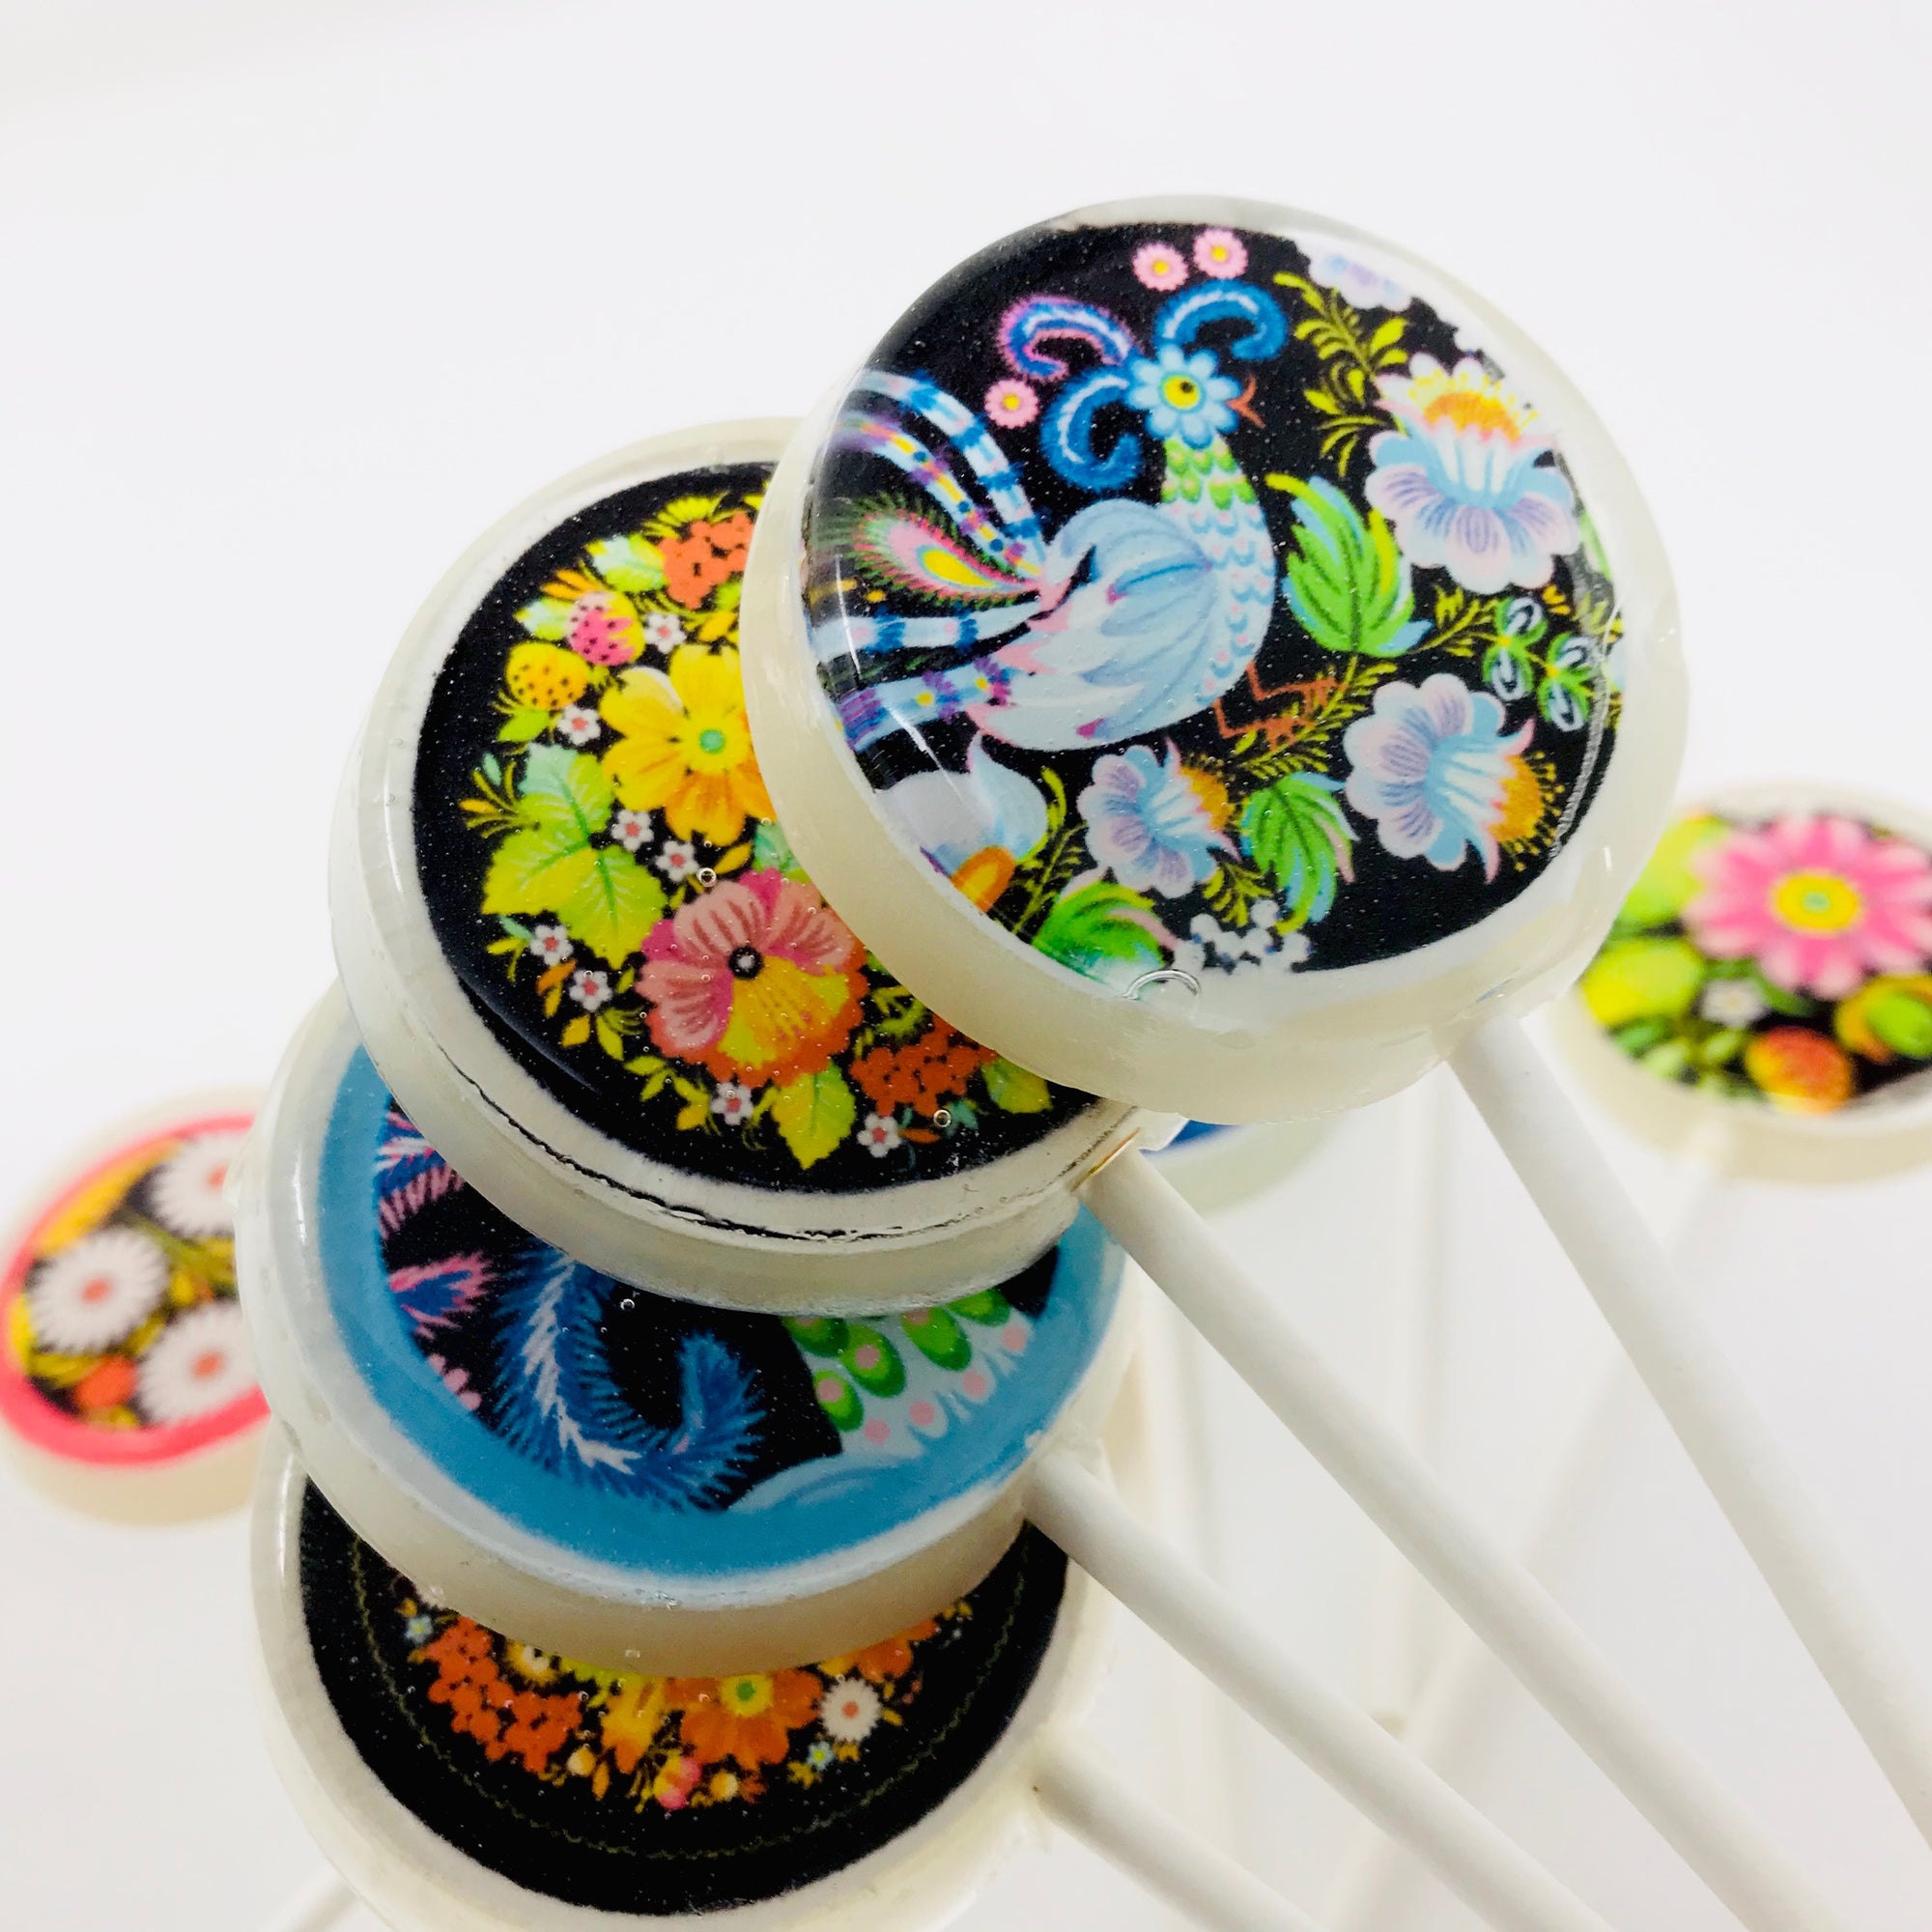 Ukrainian Style Ornament Lollipops 5-piece set by I Want Candy!